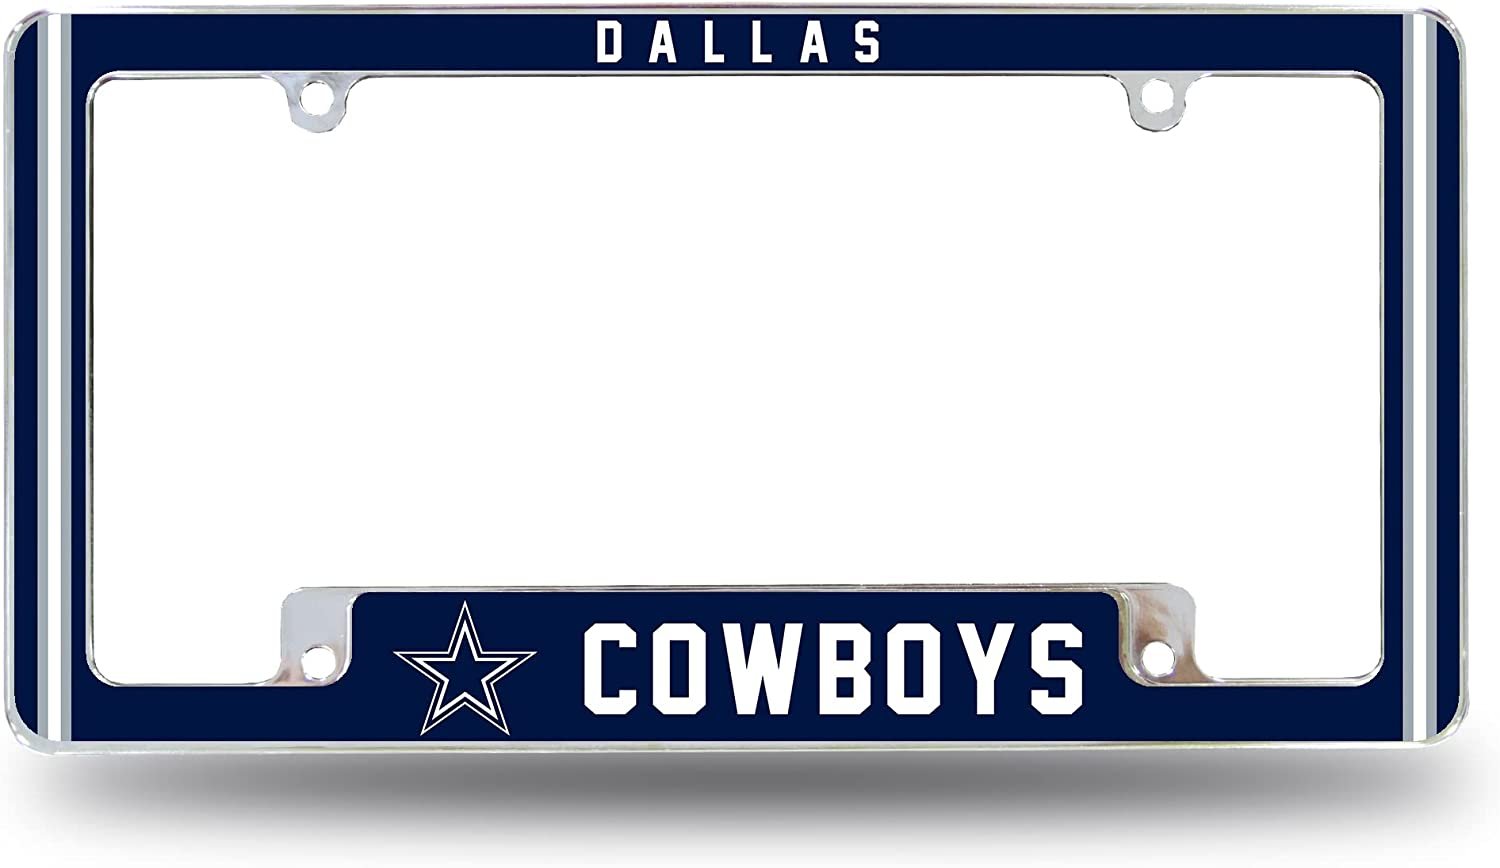 Dallas Cowboys Metal License Plate Frame Chrome Tag Cover Alternate Design 6x12 Inch